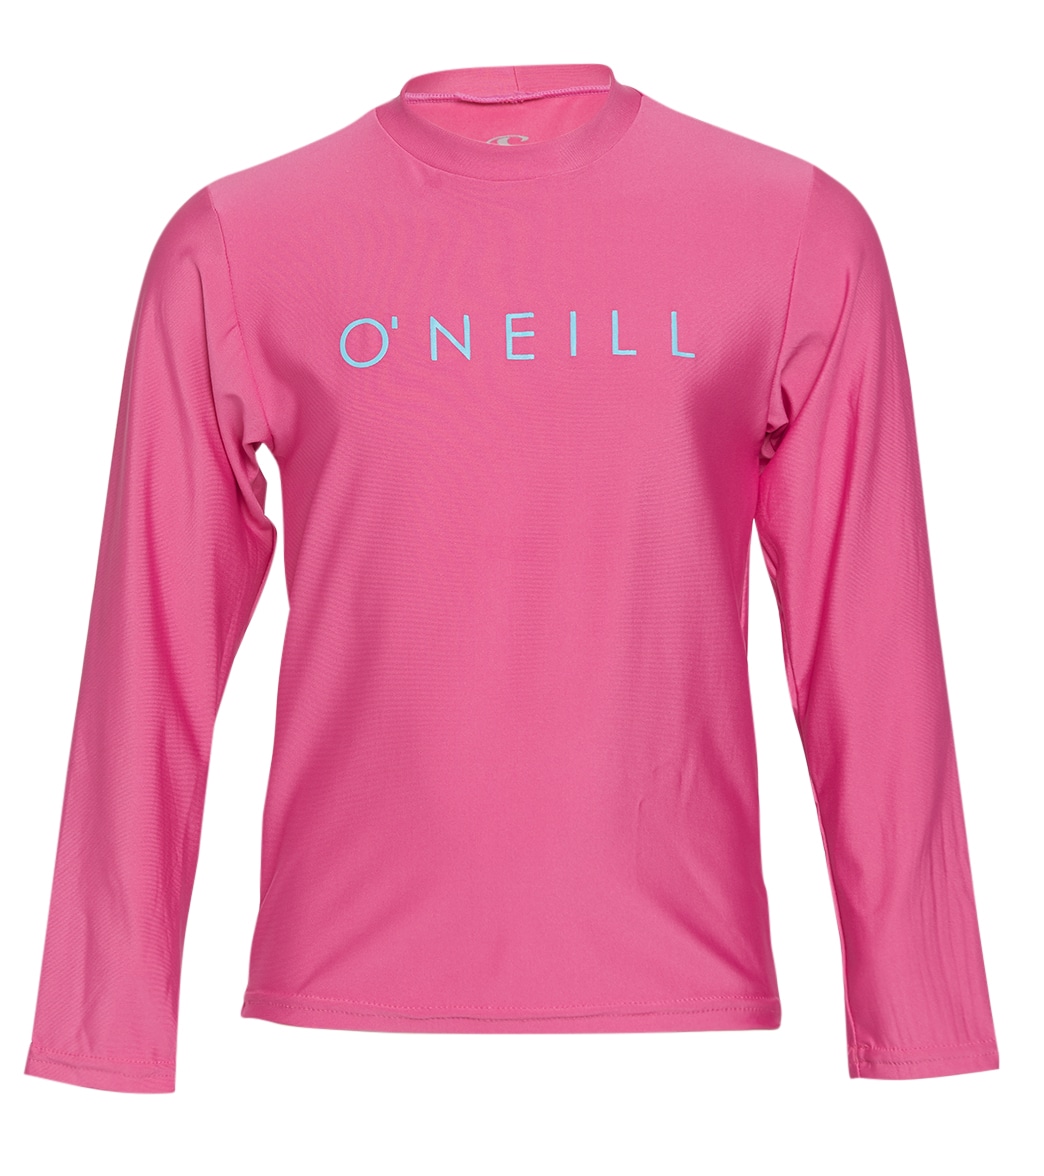 O'neill Youth Basic Upf 30+ Long Sleeve Sun Shirt - Fox Pink 16 Polyester - Swimoutlet.com